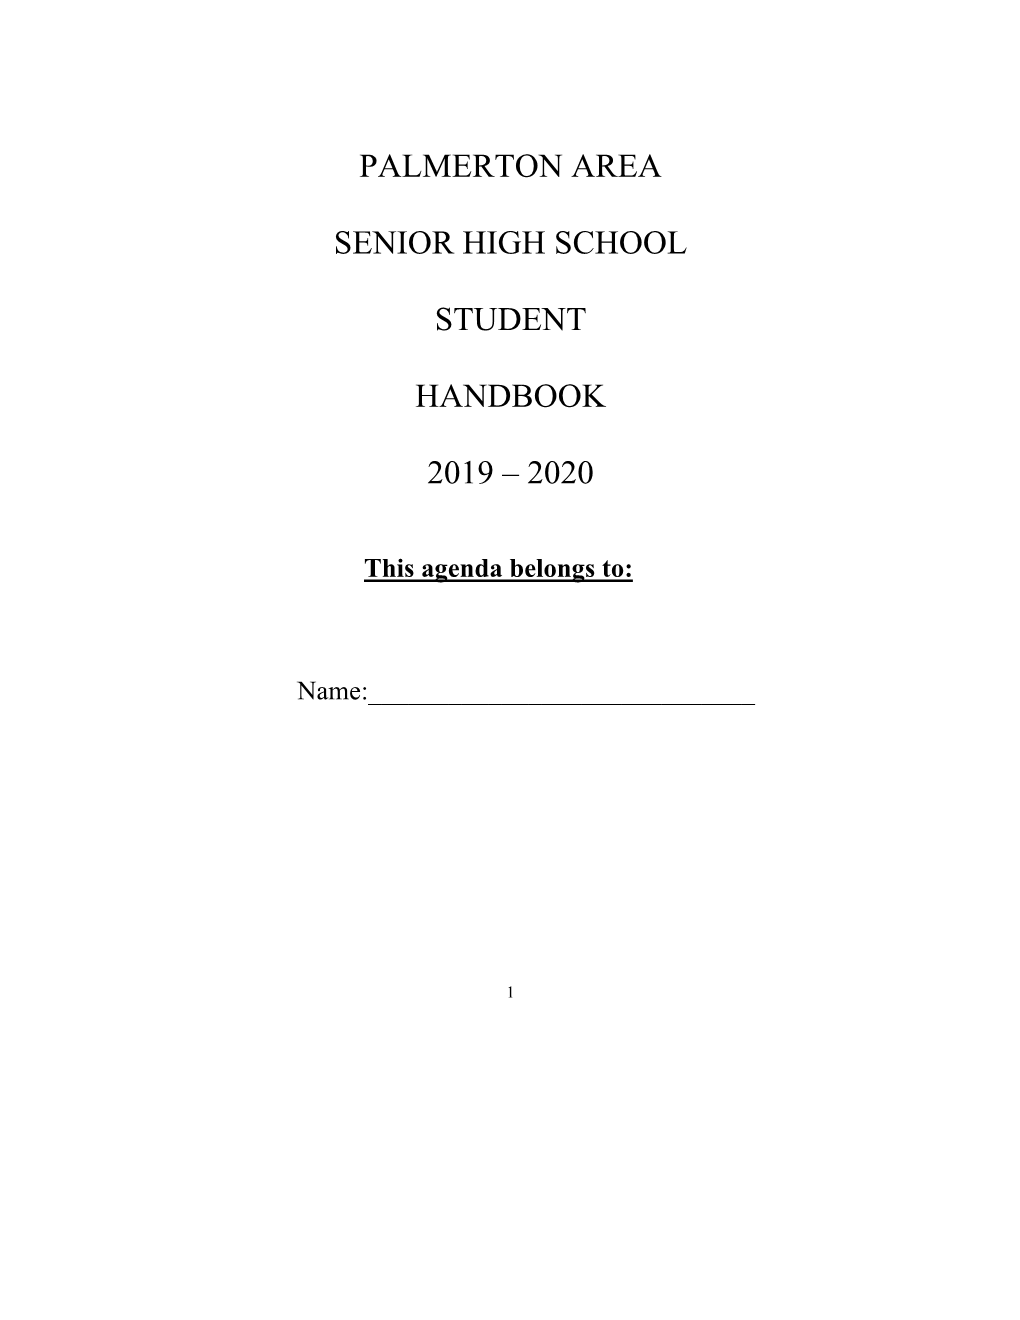 Palmerton Area Senior High School Student Handbook 2019 – 2020